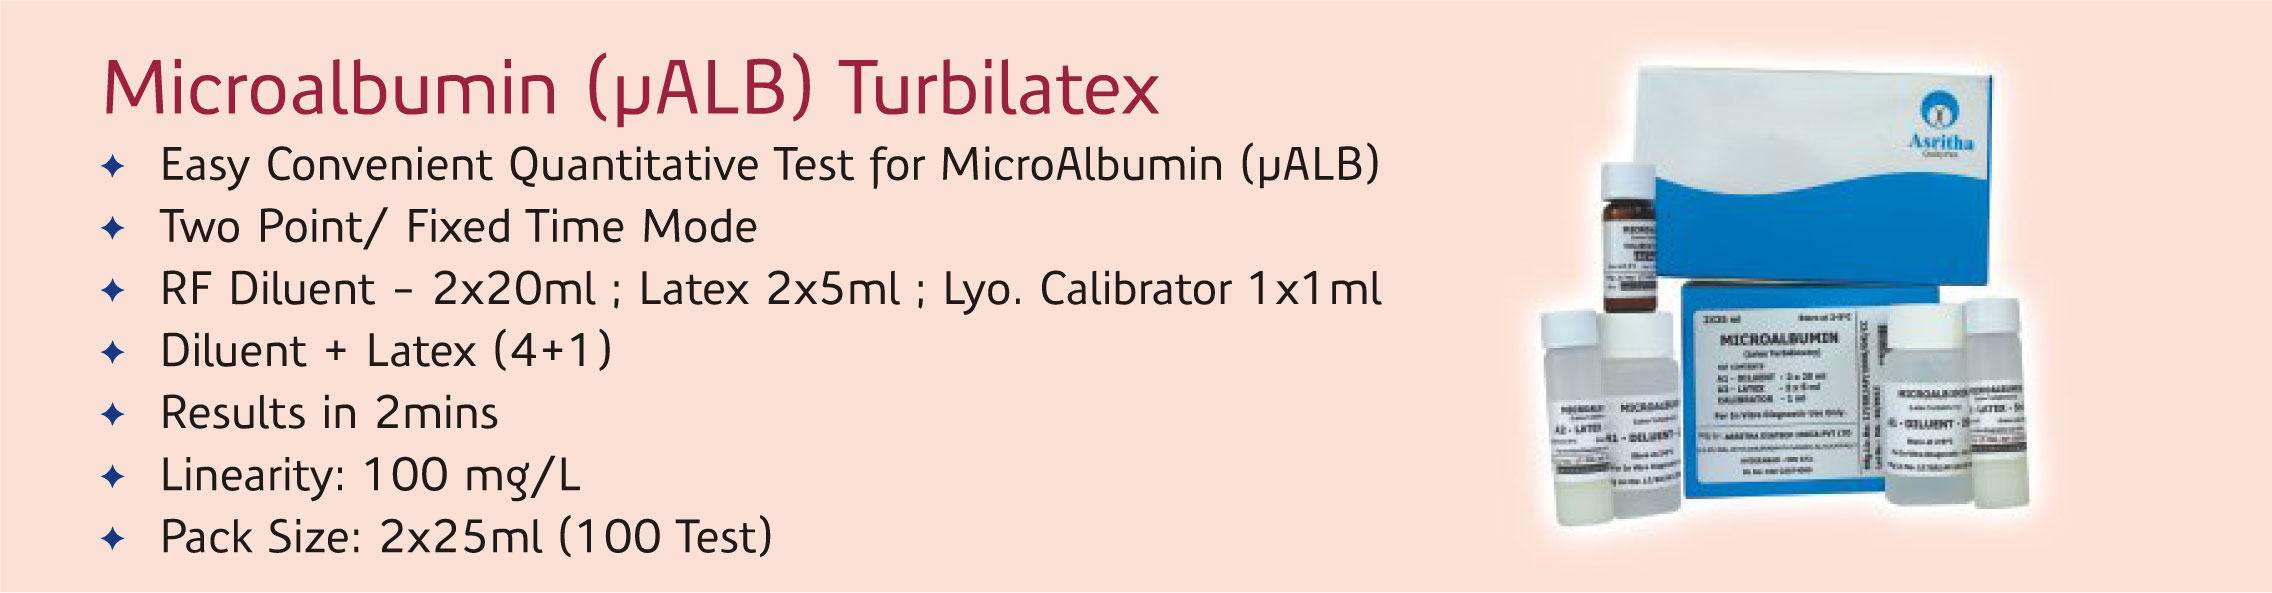 Microalbumin Turbilatex